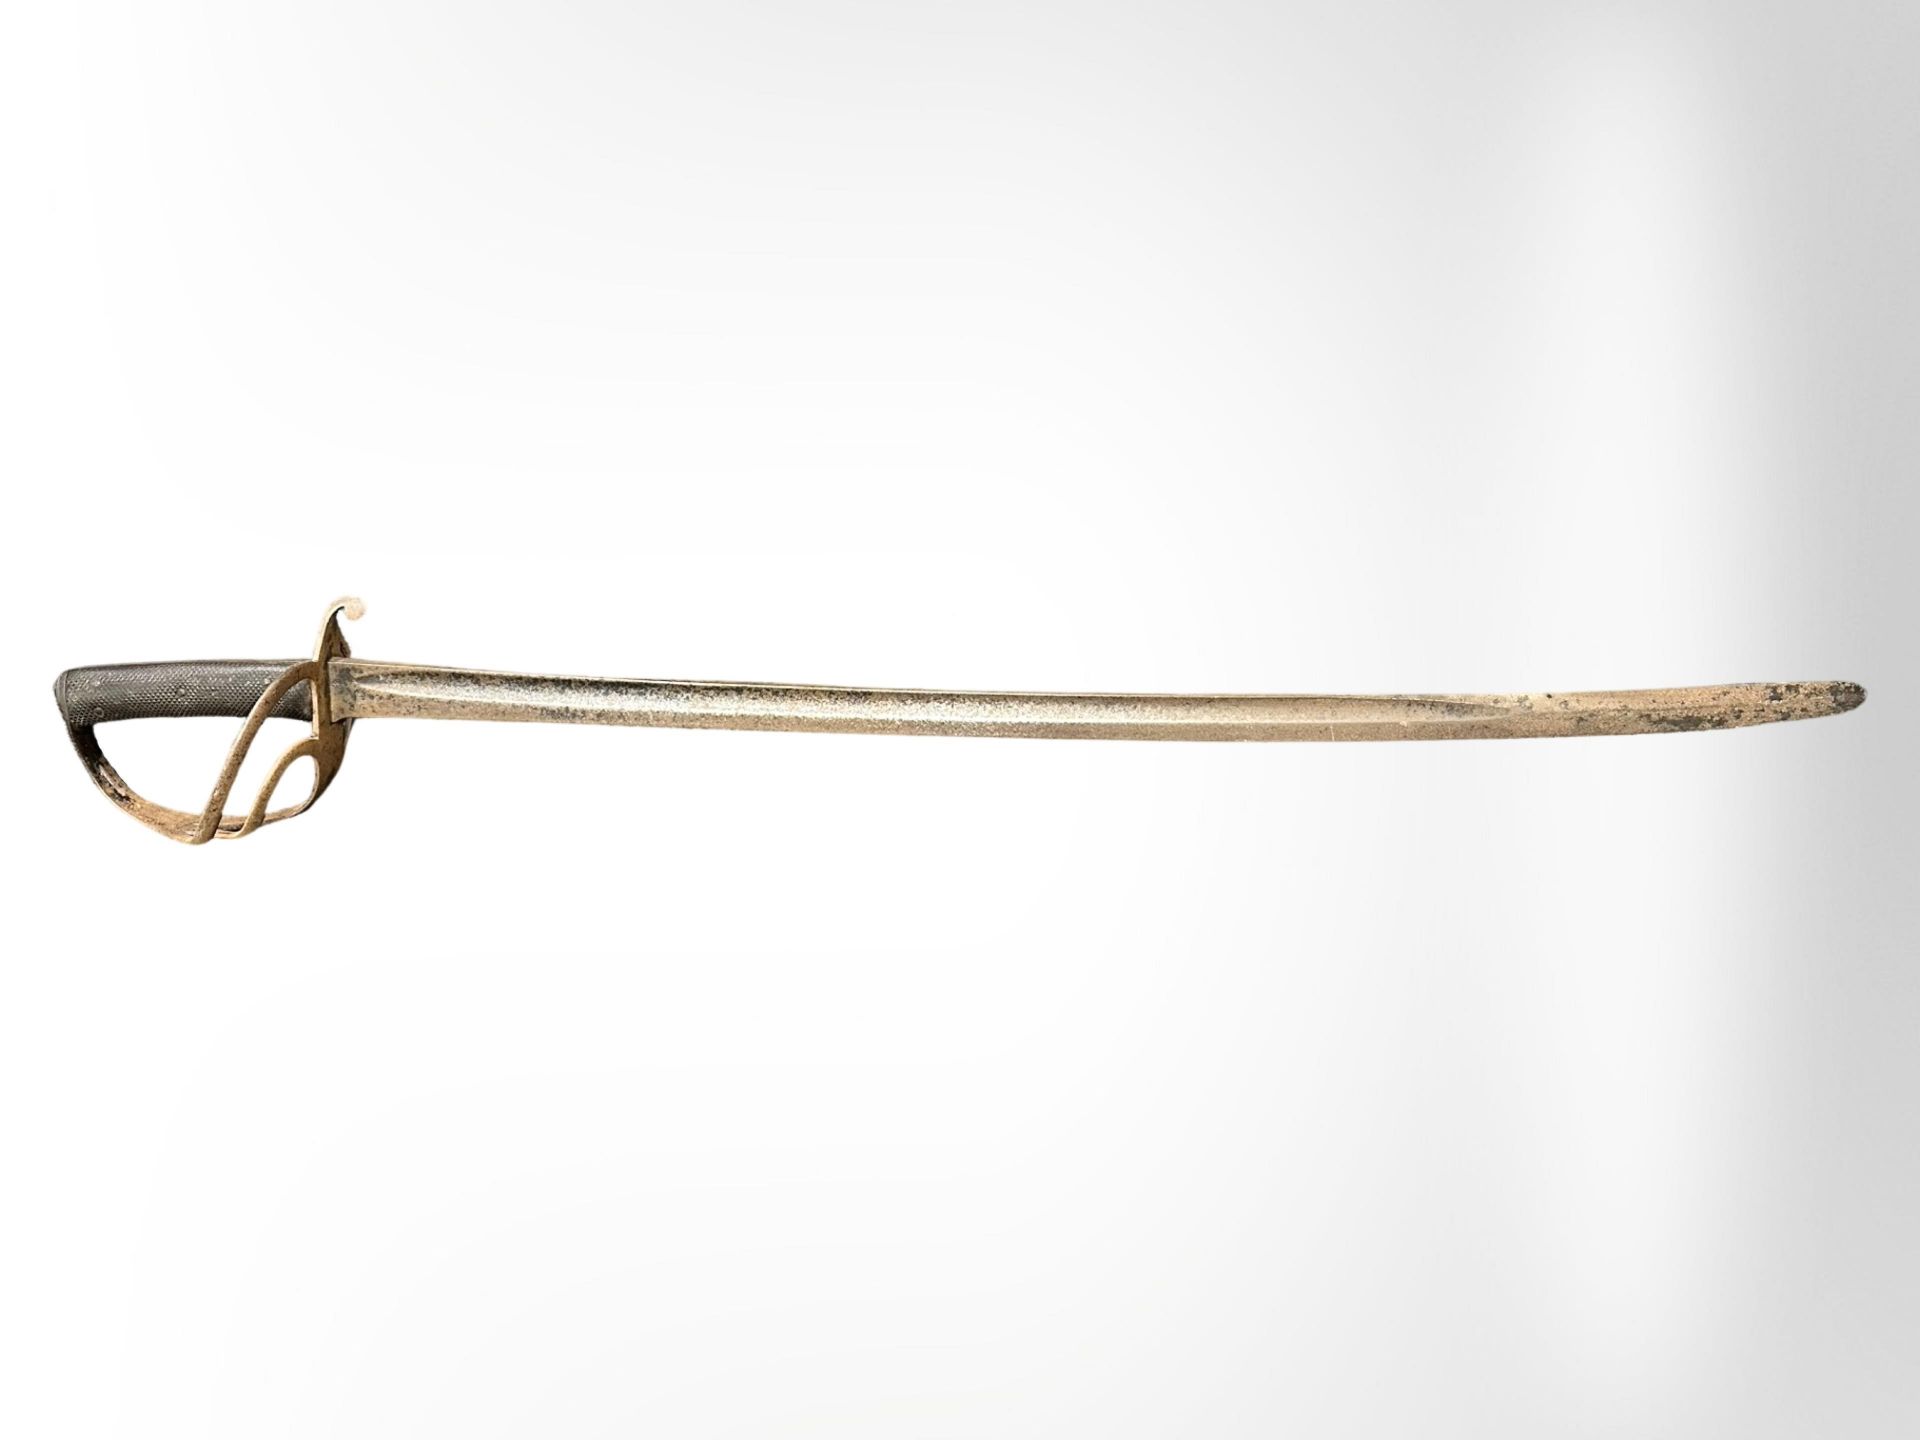 A British 1853 pattern cavalry trooper's sword, length 100cm.